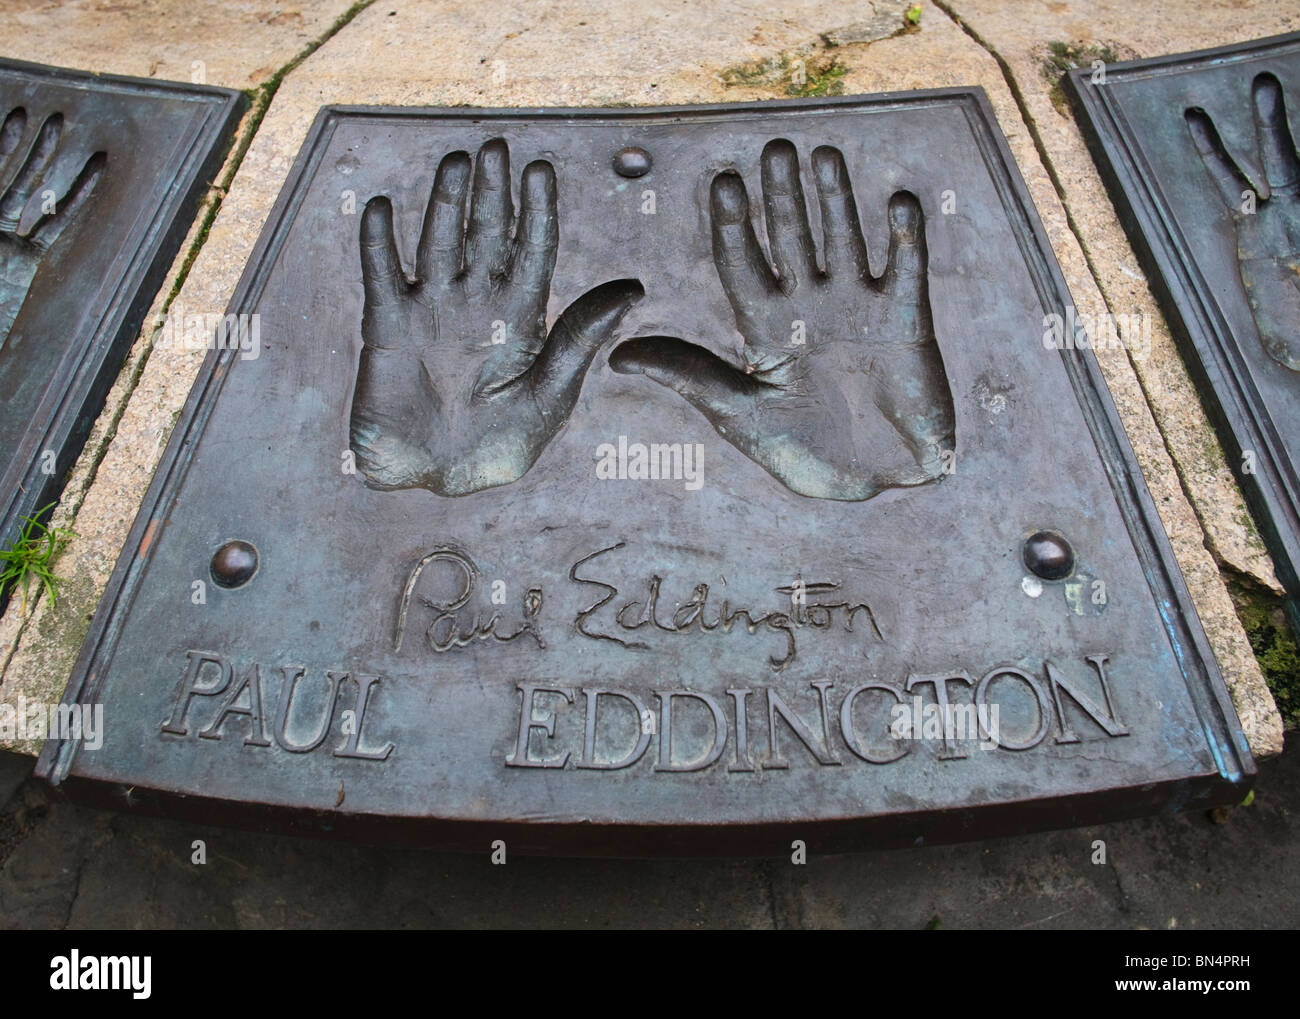 Hand prints and signature of the British actor Paul Eddington, New Theatre Royal, Bath Stock Photo